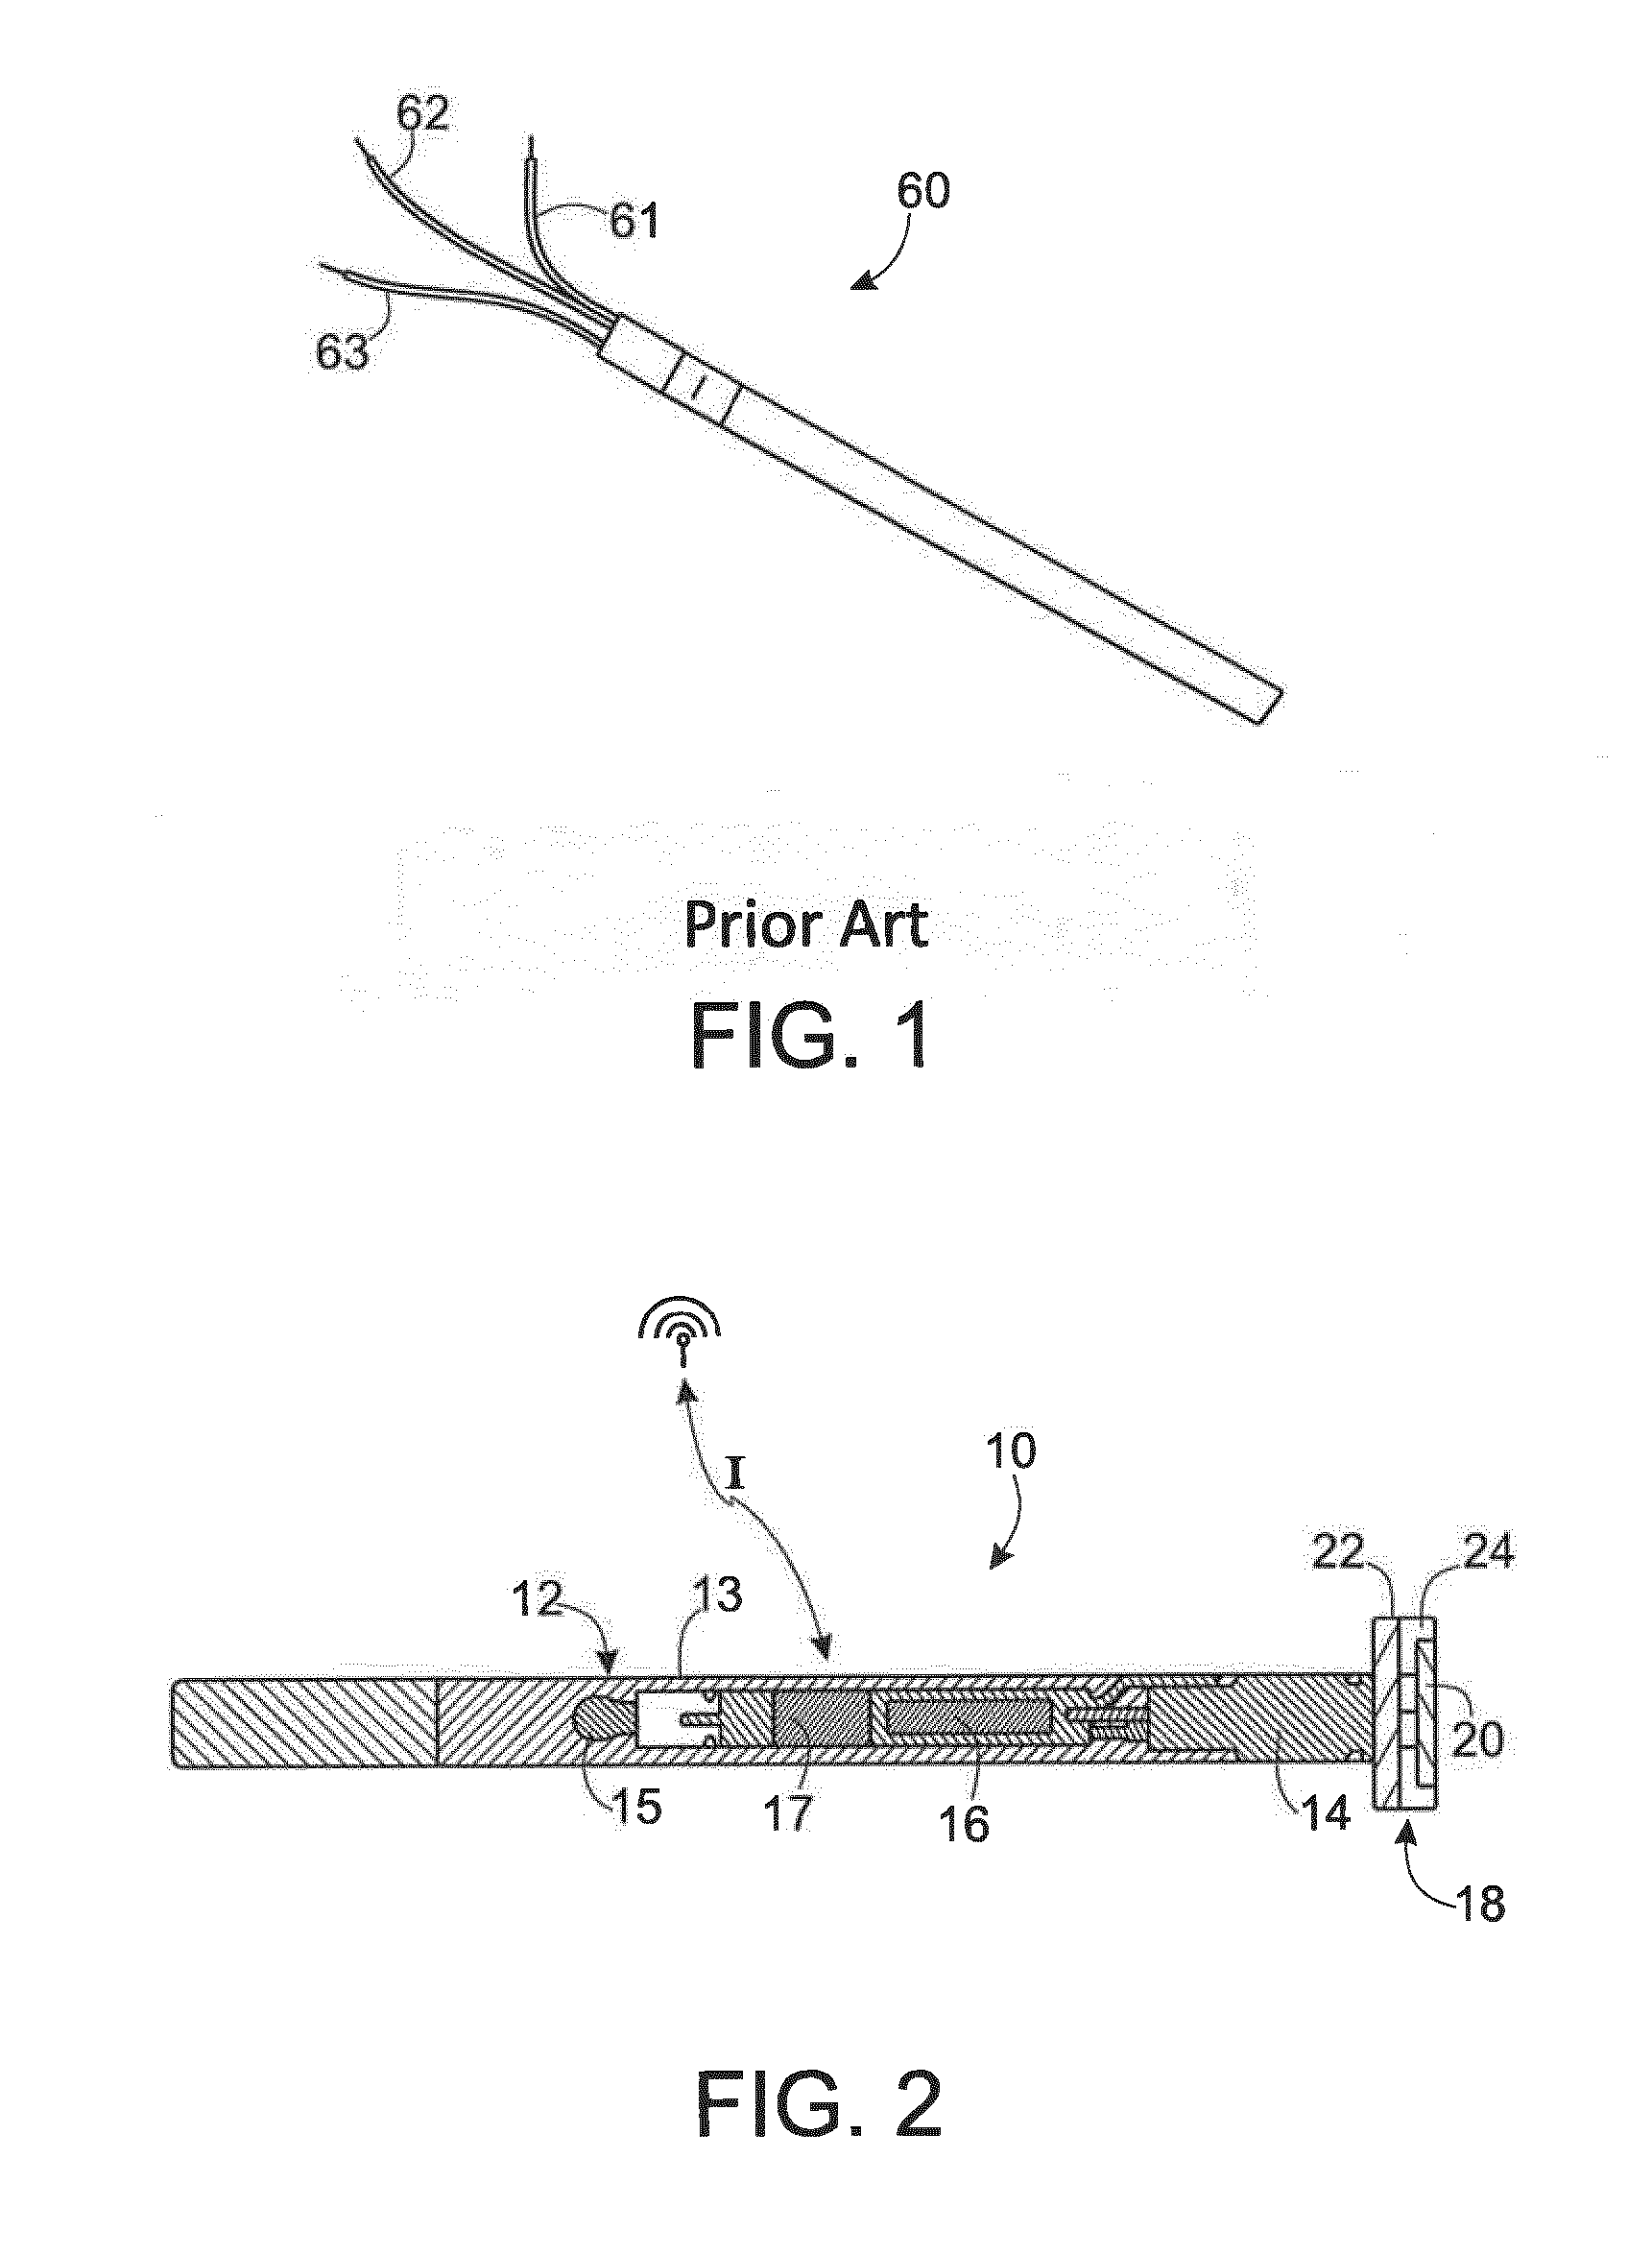 Perforating gun and detonator assembly